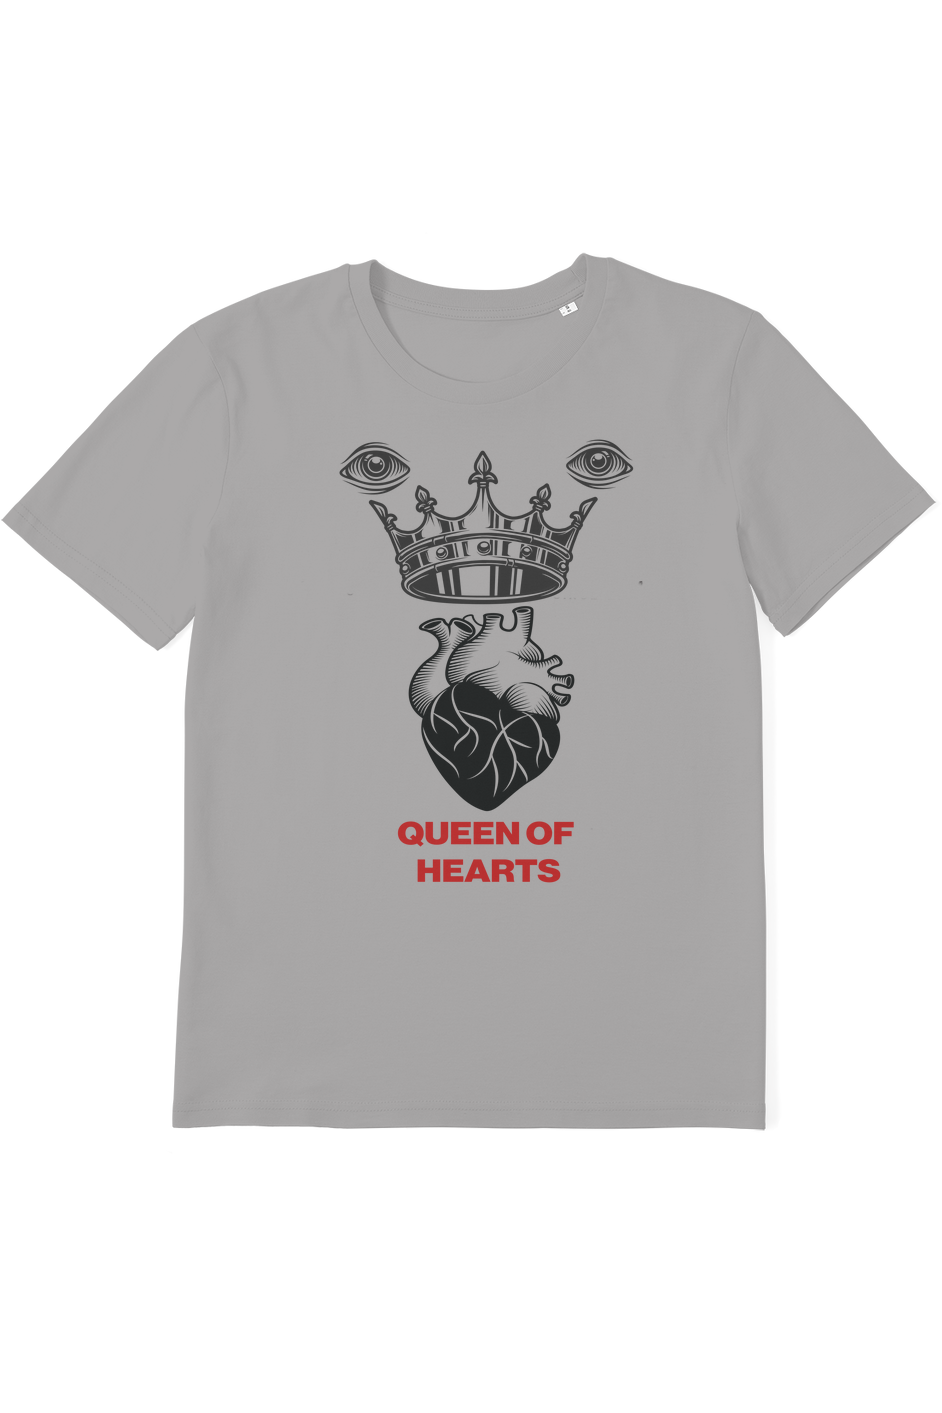 Queen of Hearts Organic T-Shirt vegan, sustainable, organic streetwear, - TRVTH ORGANIC CLOTHING